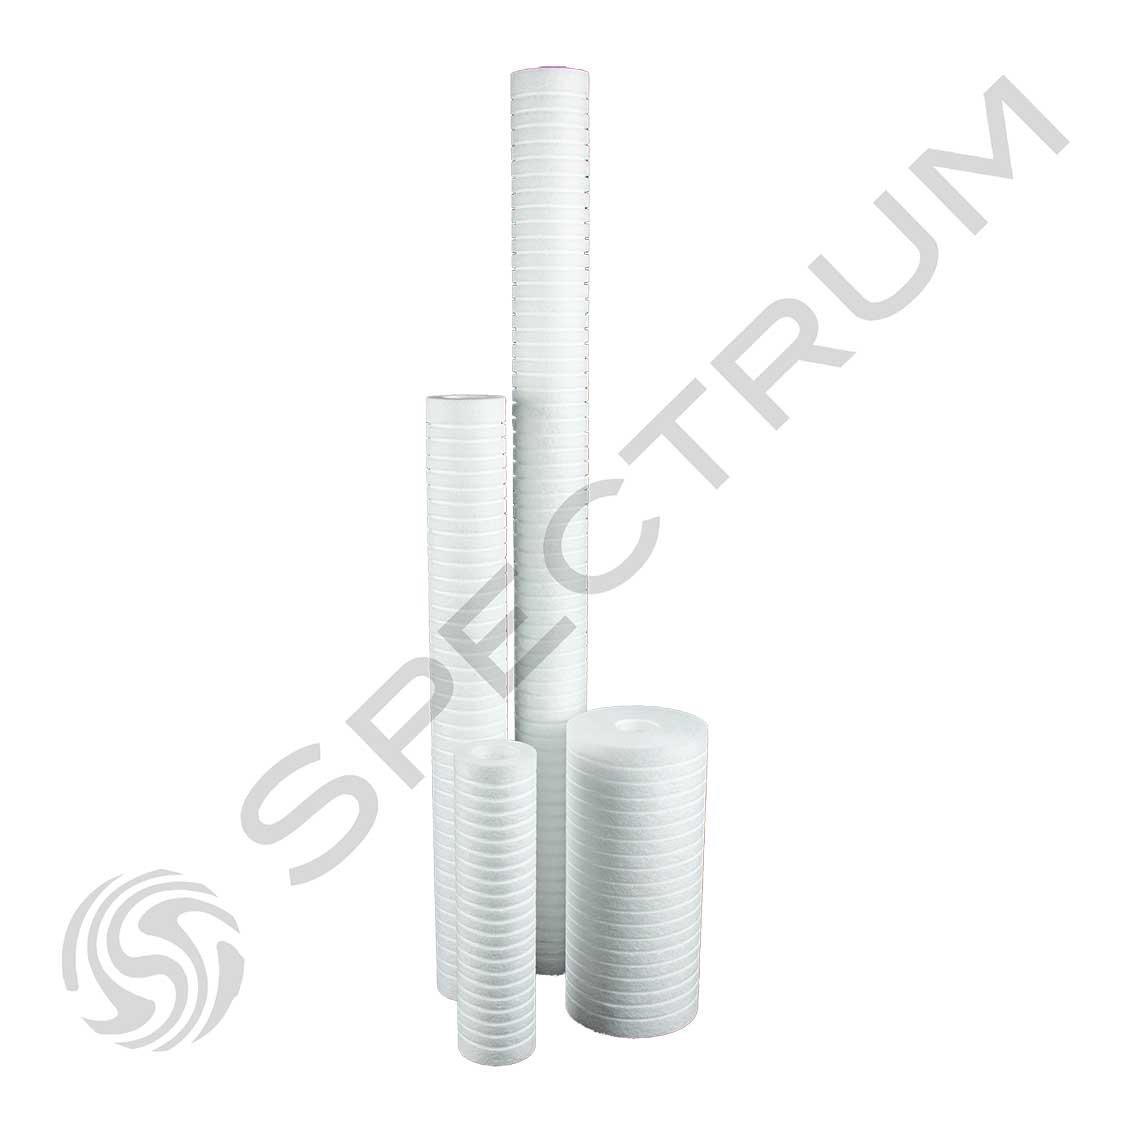 SPECTRUM PSP-1-40 Premier Spun Bonded TruDepth Filter  1 micron  40